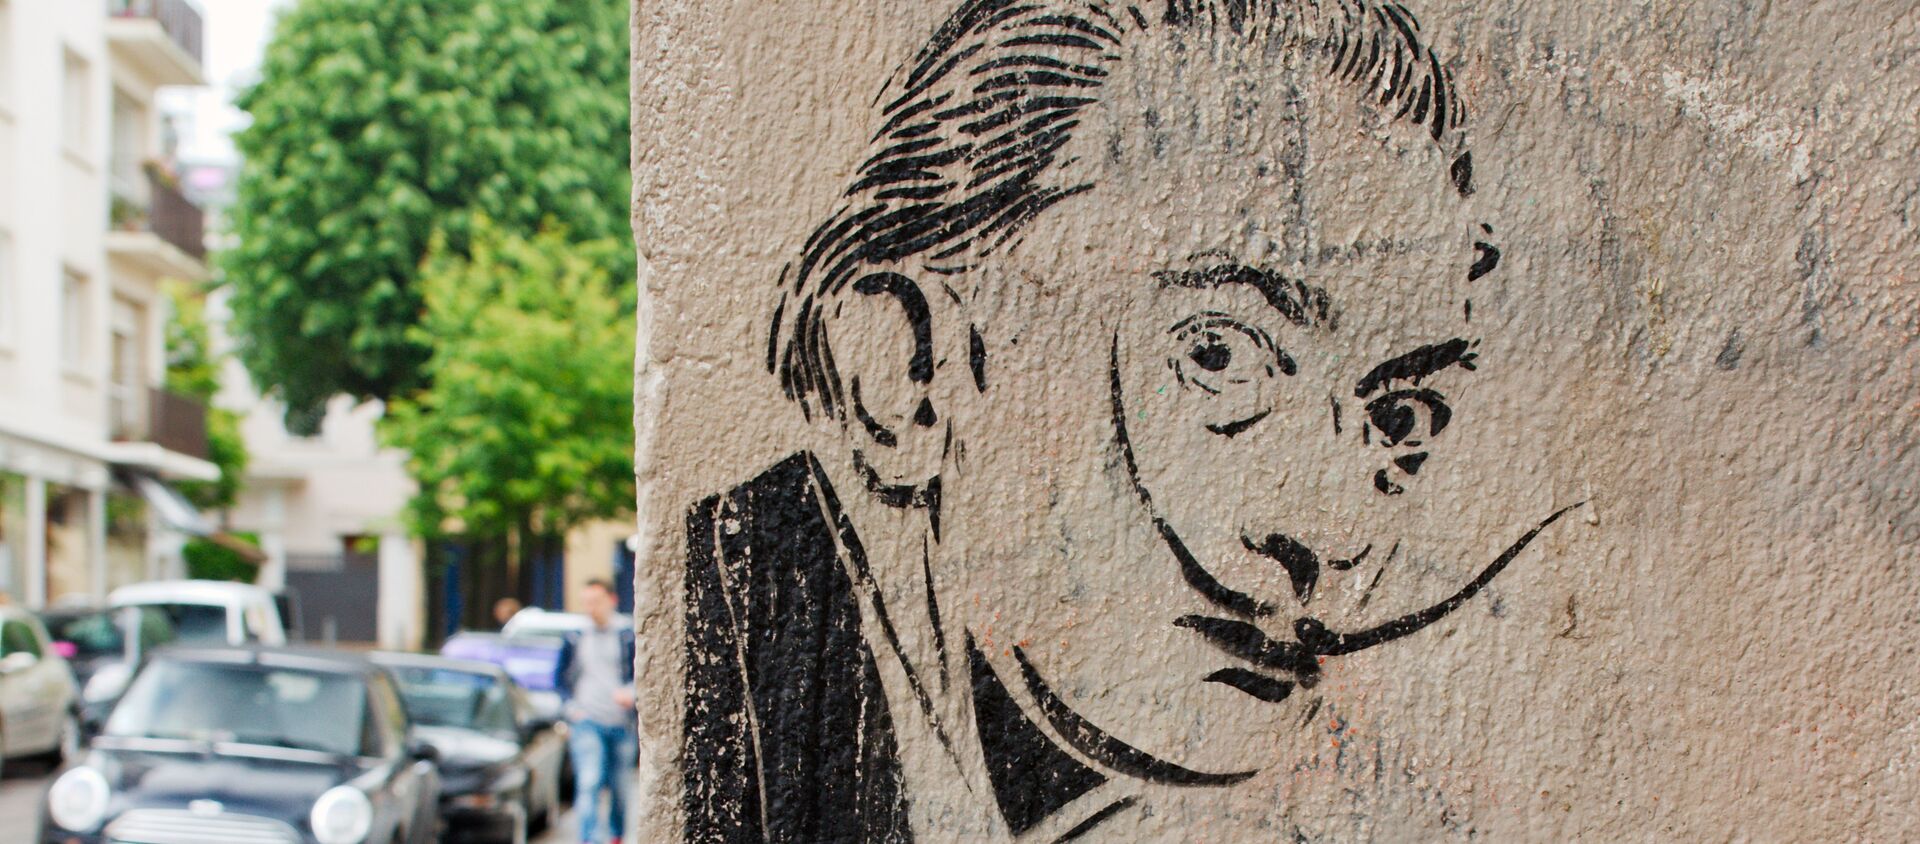 Un graffiti con el retrato de Salvador Dalí - Sputnik Mundo, 1920, 21.07.2017